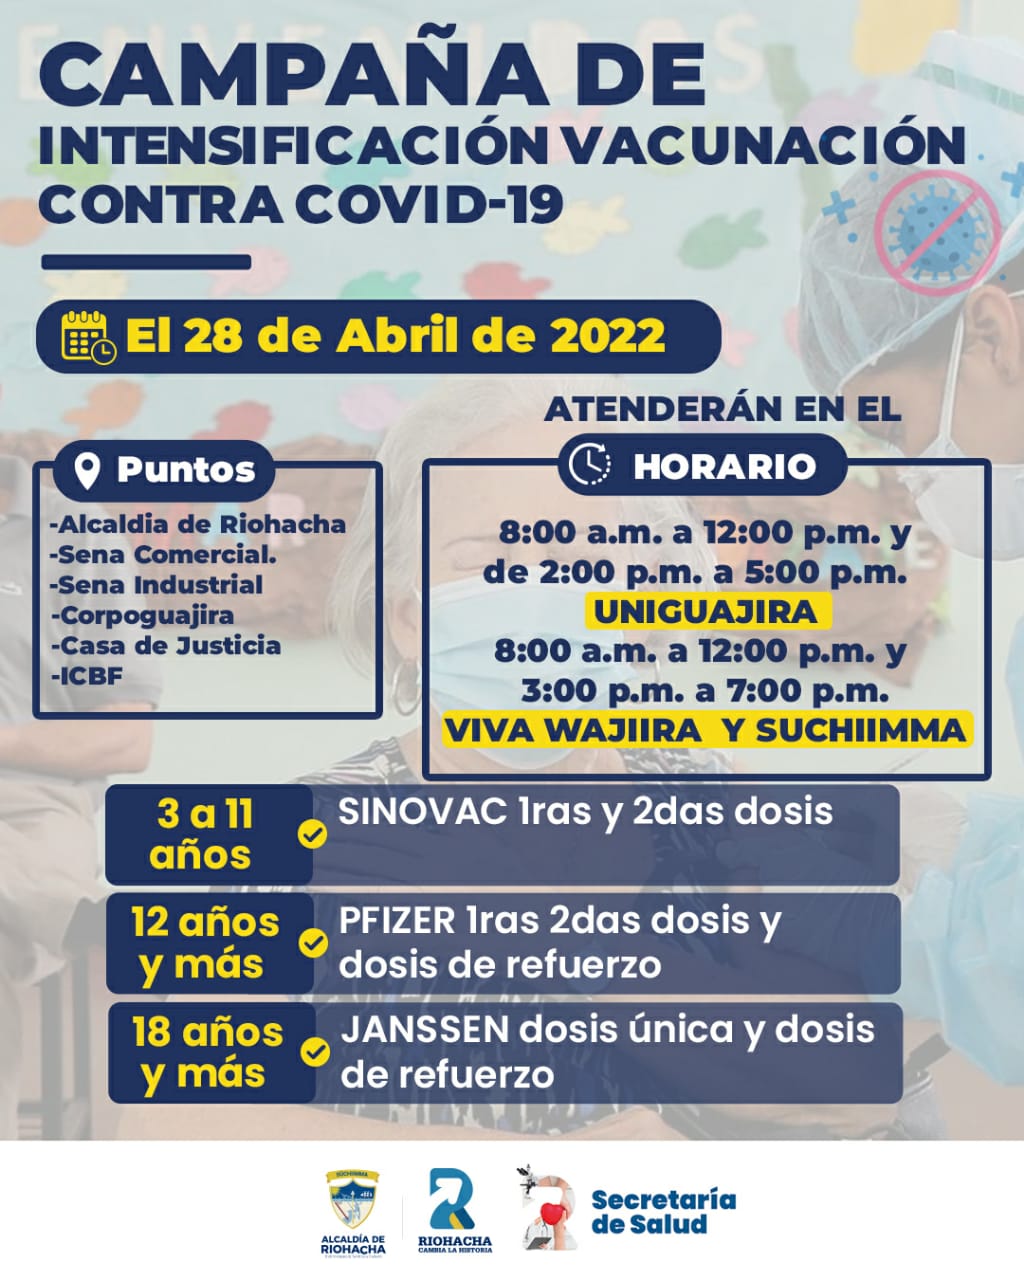 https://www.notasrosas.com/Para sonreir sin tapabocas en Riohacha: este 28 de abril de 2022 se colocan refuerzos de la vacuna Covid-19